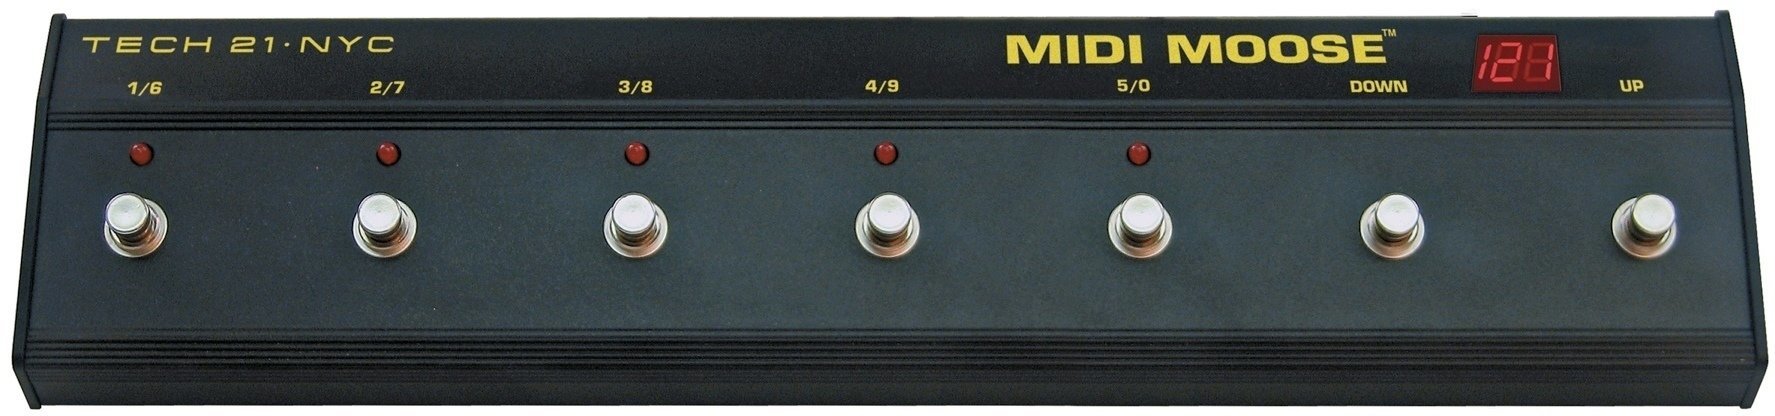 MIDI-ohjain Tech 21 MIDI Moose